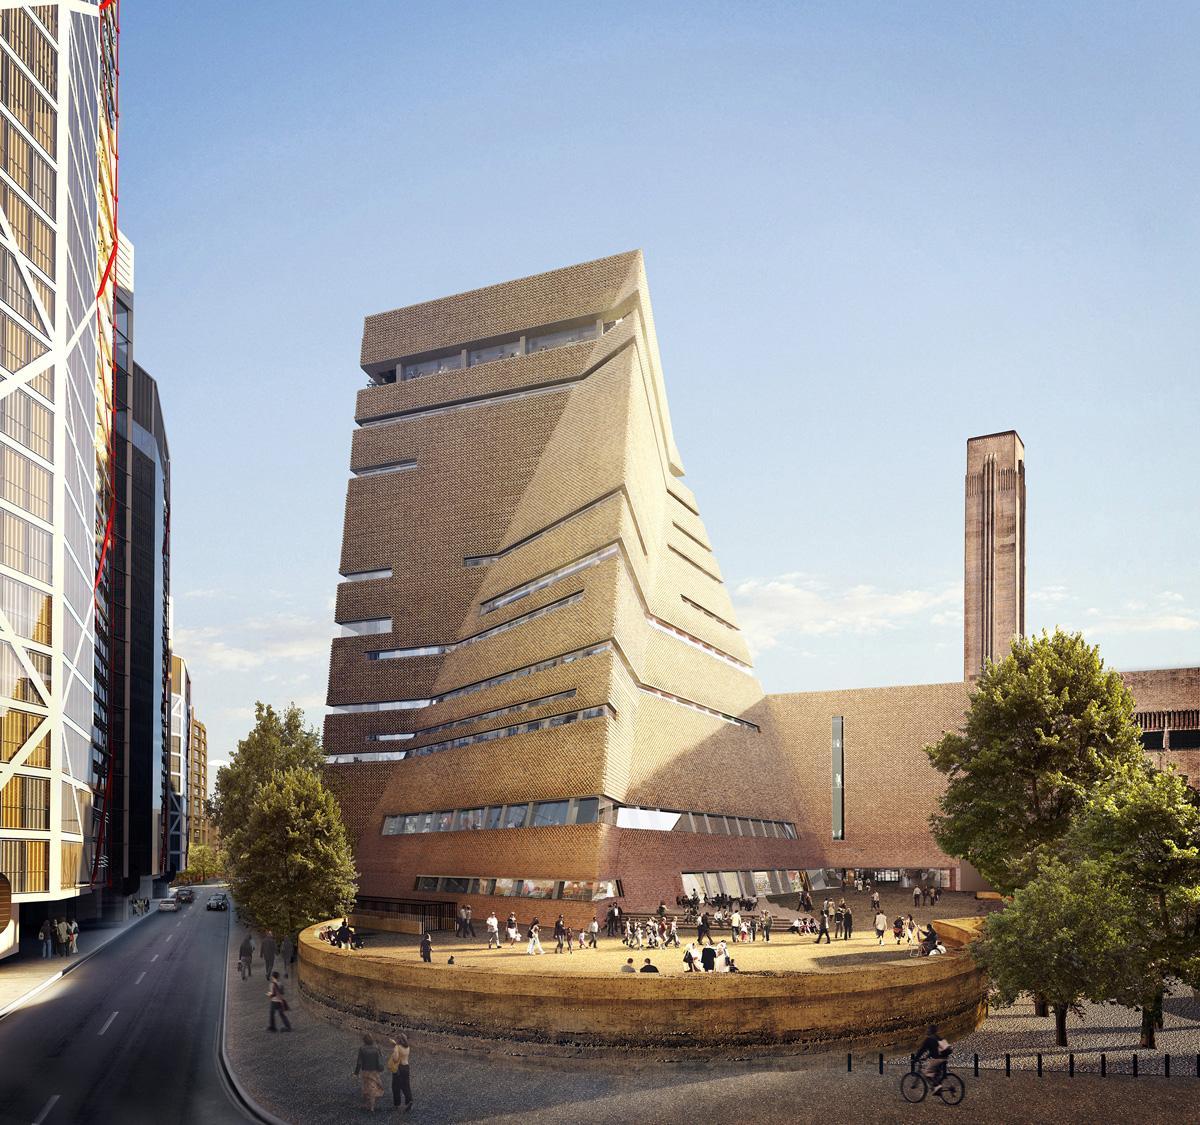 The Tate Modern extension in London by Herzog & de Meuron